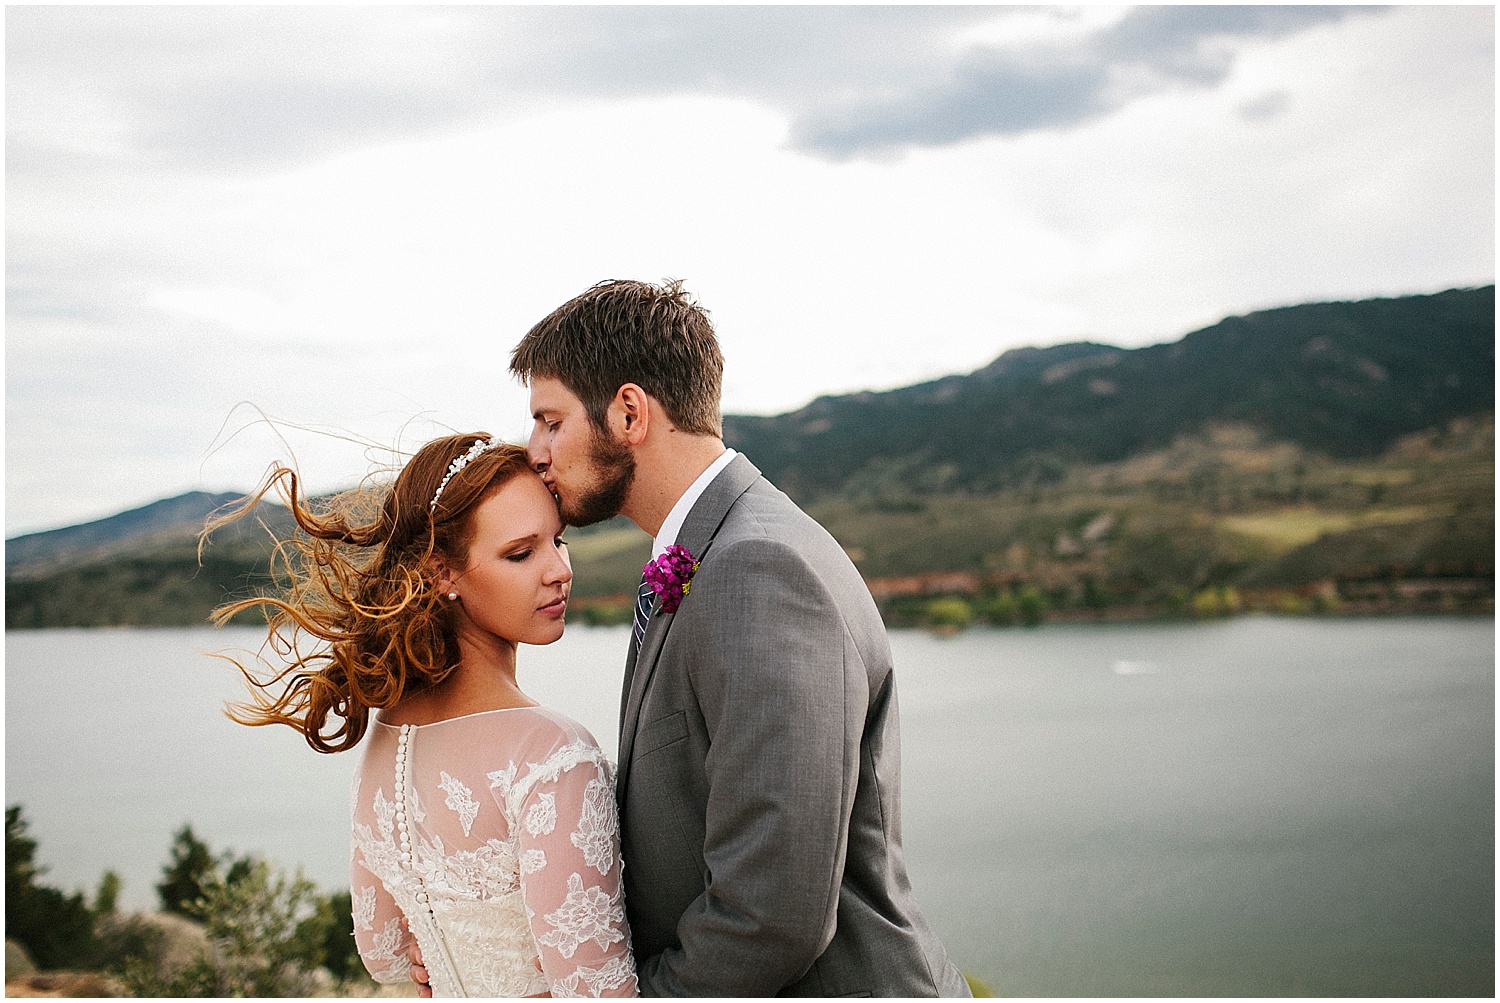 Mary + Dylan – Horsetooth Reservoir wedding photography